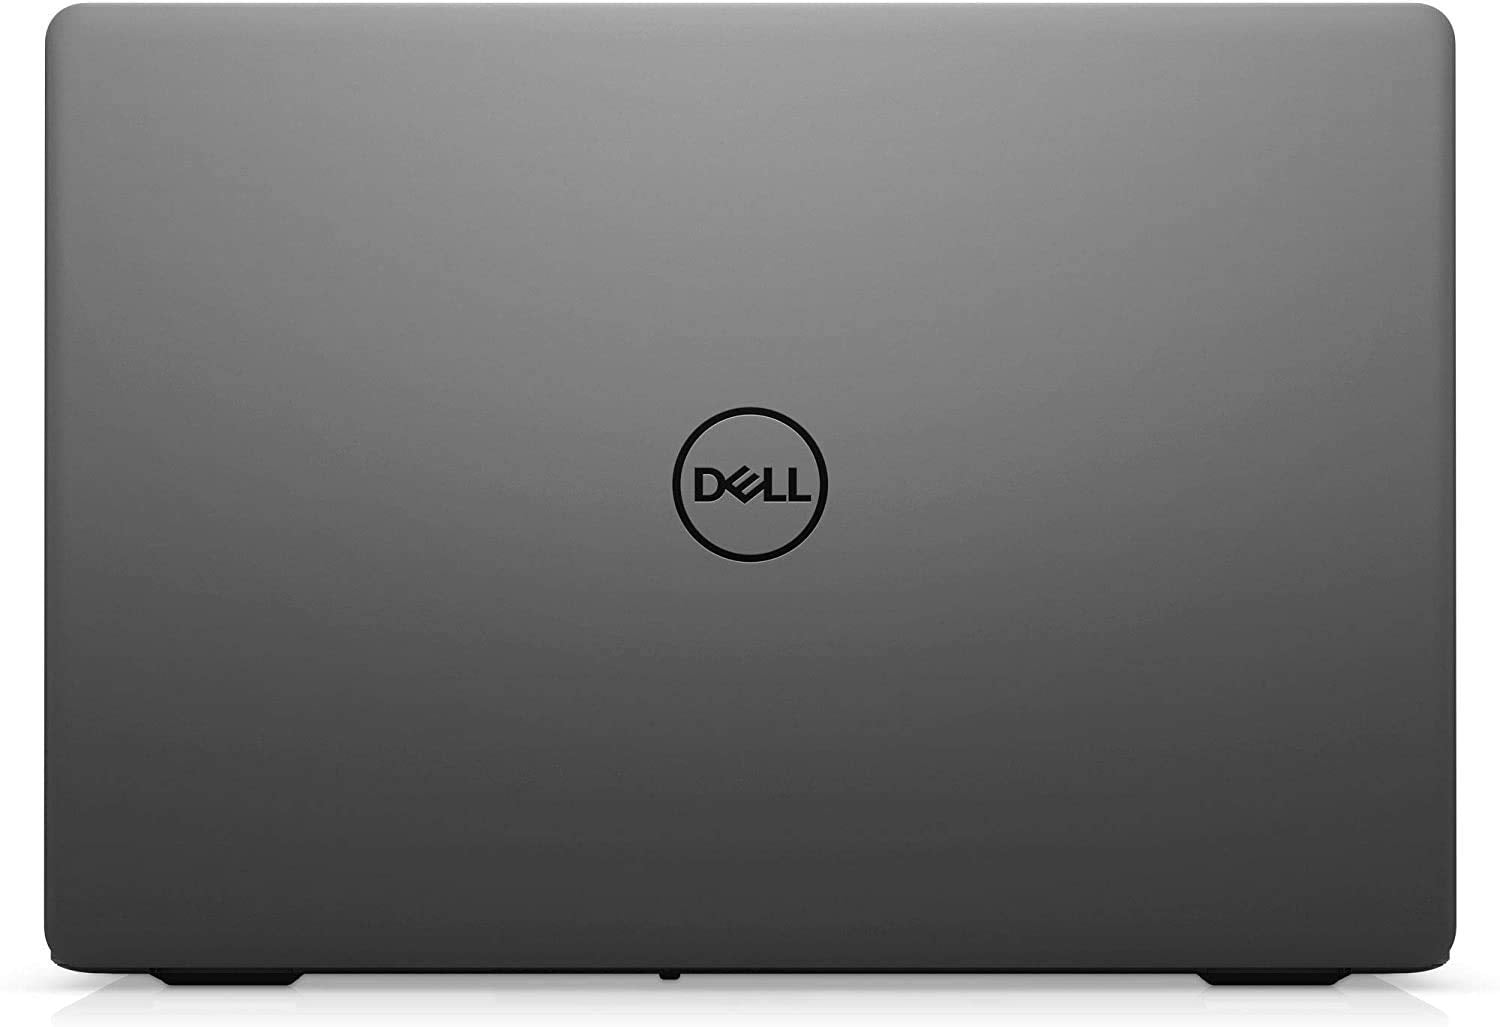 Dell Laptop Inspiron 3501, Core i5, 11th Gen, 8GB, Nvidia GeForce MX330 2GB GDDR5